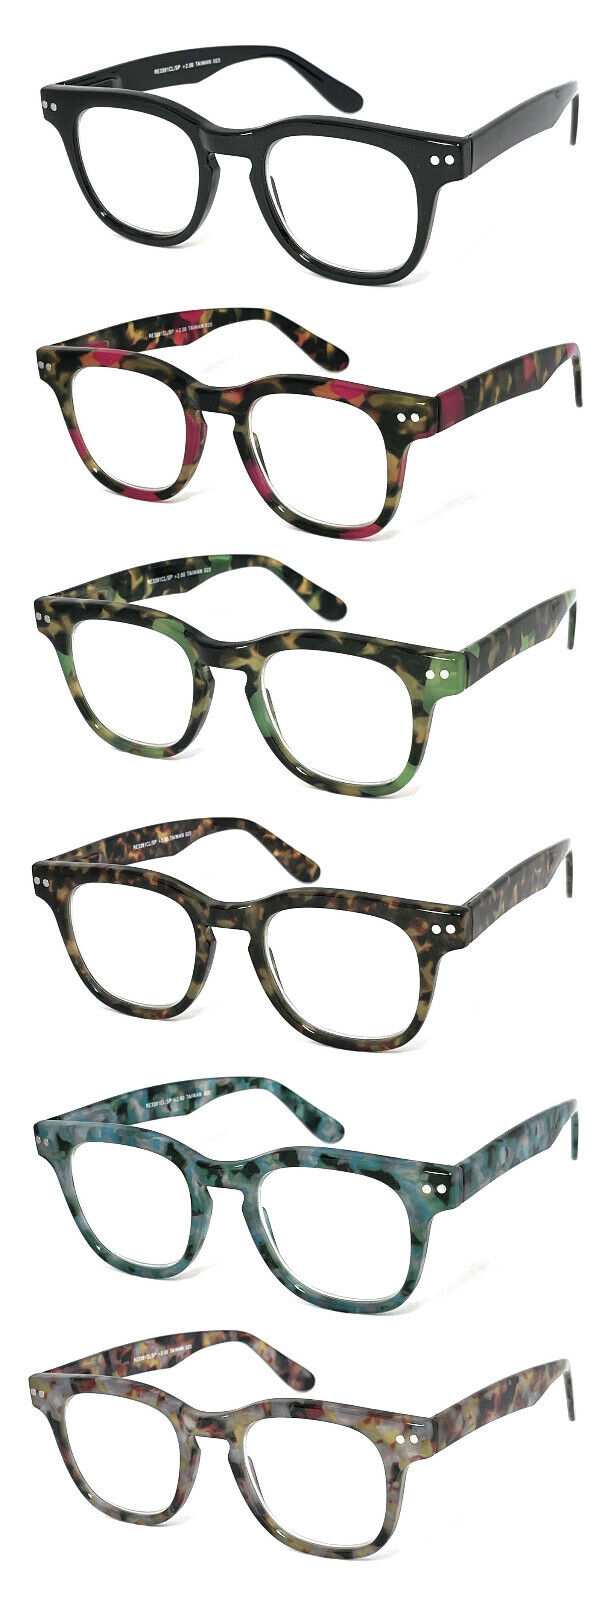 1 or 2 Pairs Retro Square Frame Keyhole Reading Glasses Full Lens Magnifed